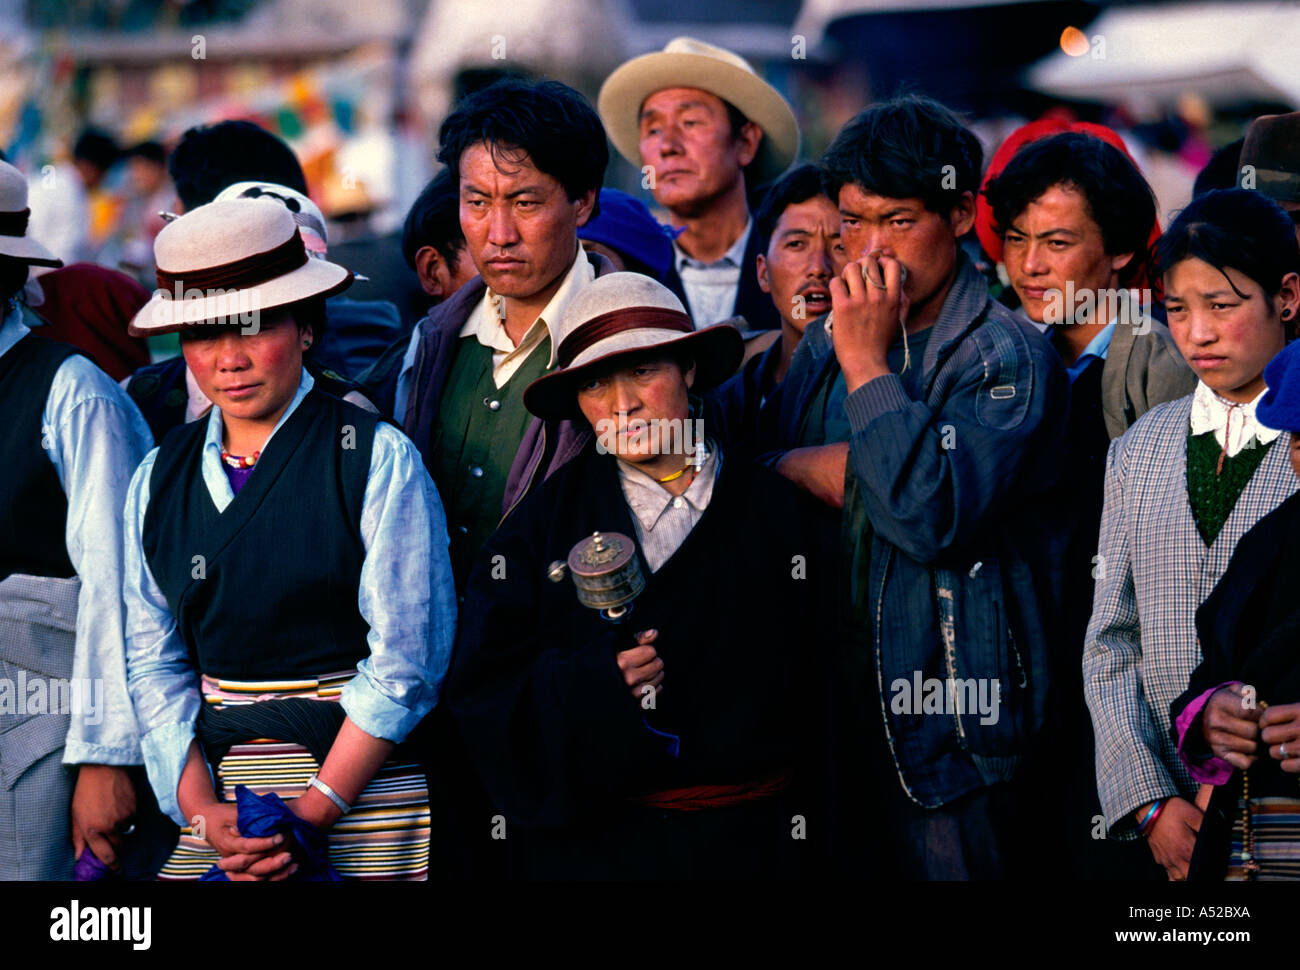 Tibetan people, Buddhists, pilgrim, pilgrims, circumambulate, circumambulation, Jokhang Temple, Barkhor Square, Lhasa, Tibet, China, Asia Stock Photo